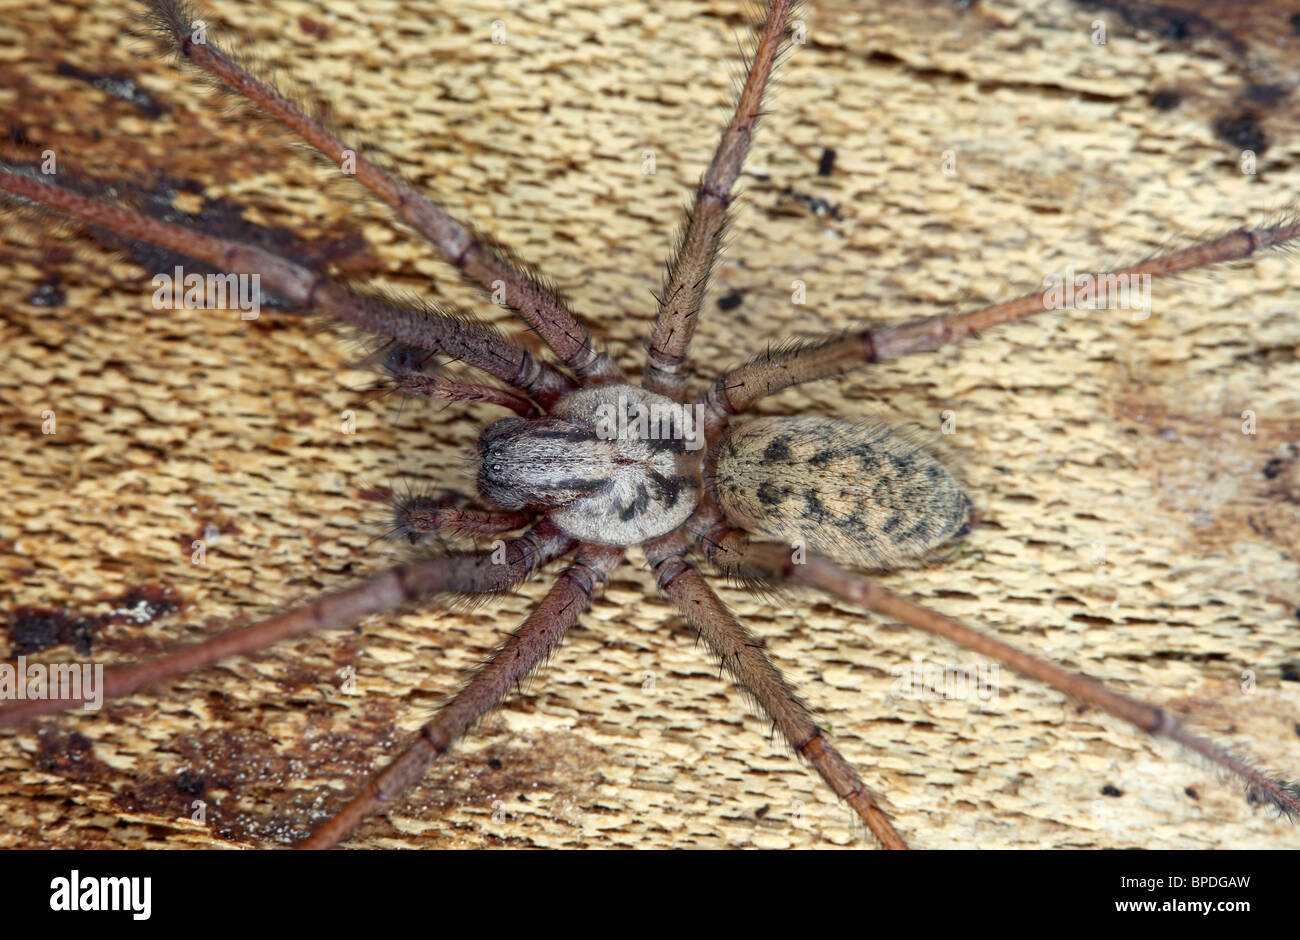 Close Up of a Spider Tegenaria gigantea Stock Photo